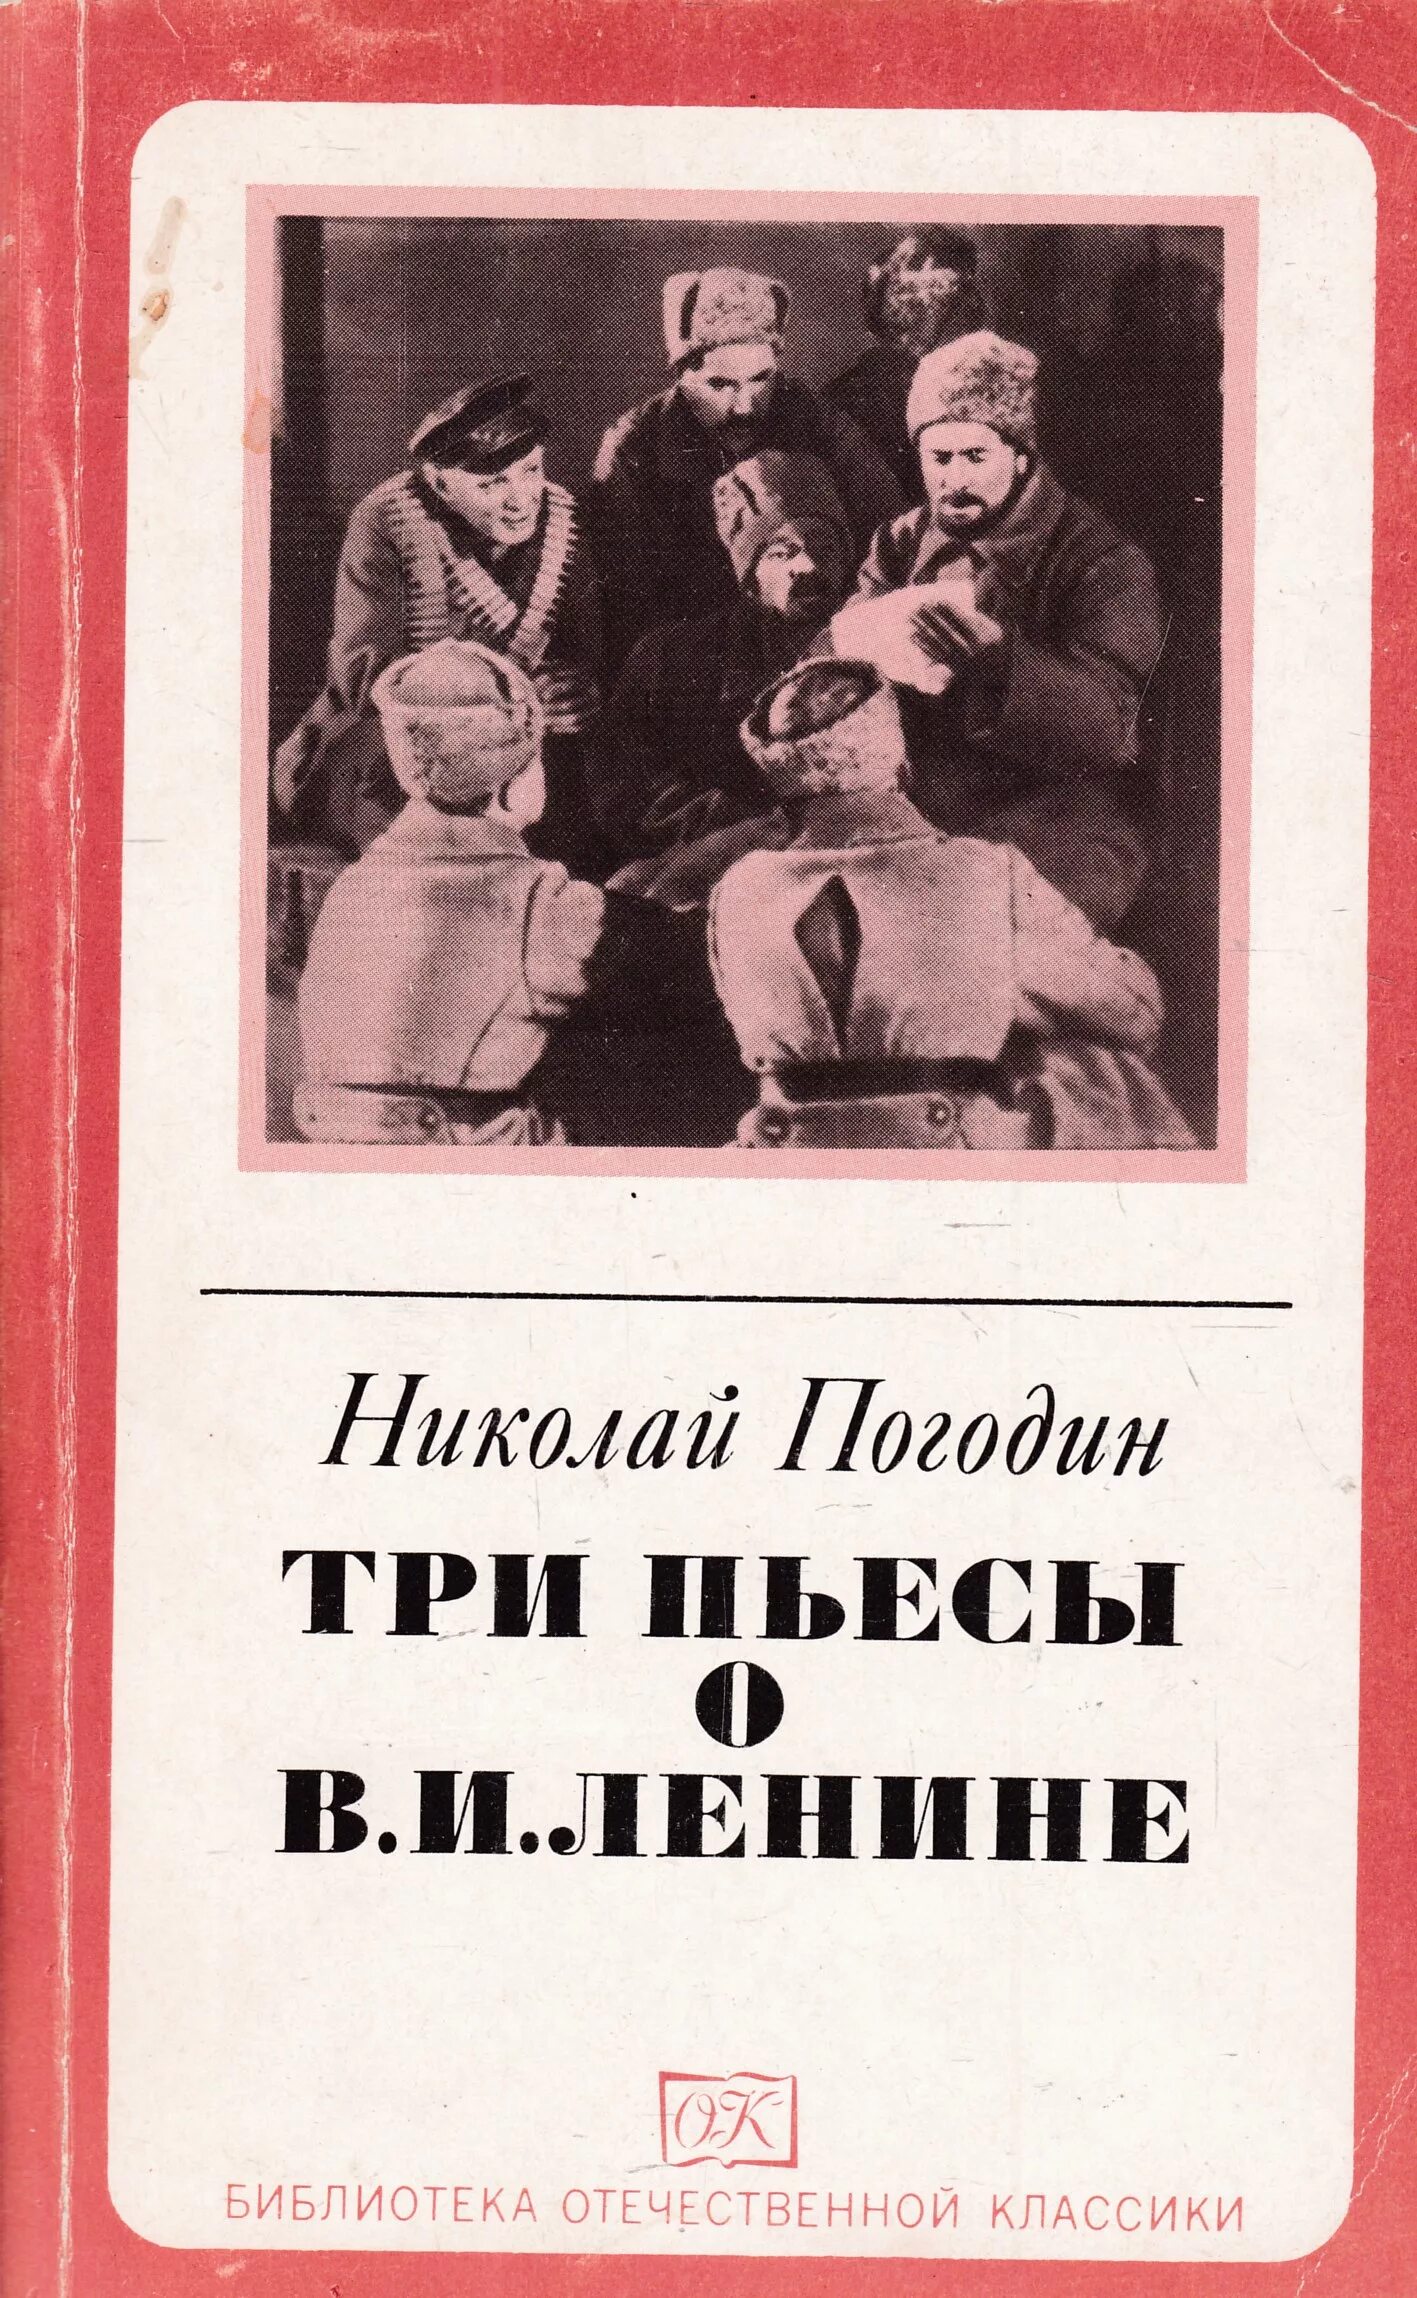 Книга Ленин. Жизнь и творчество погодина